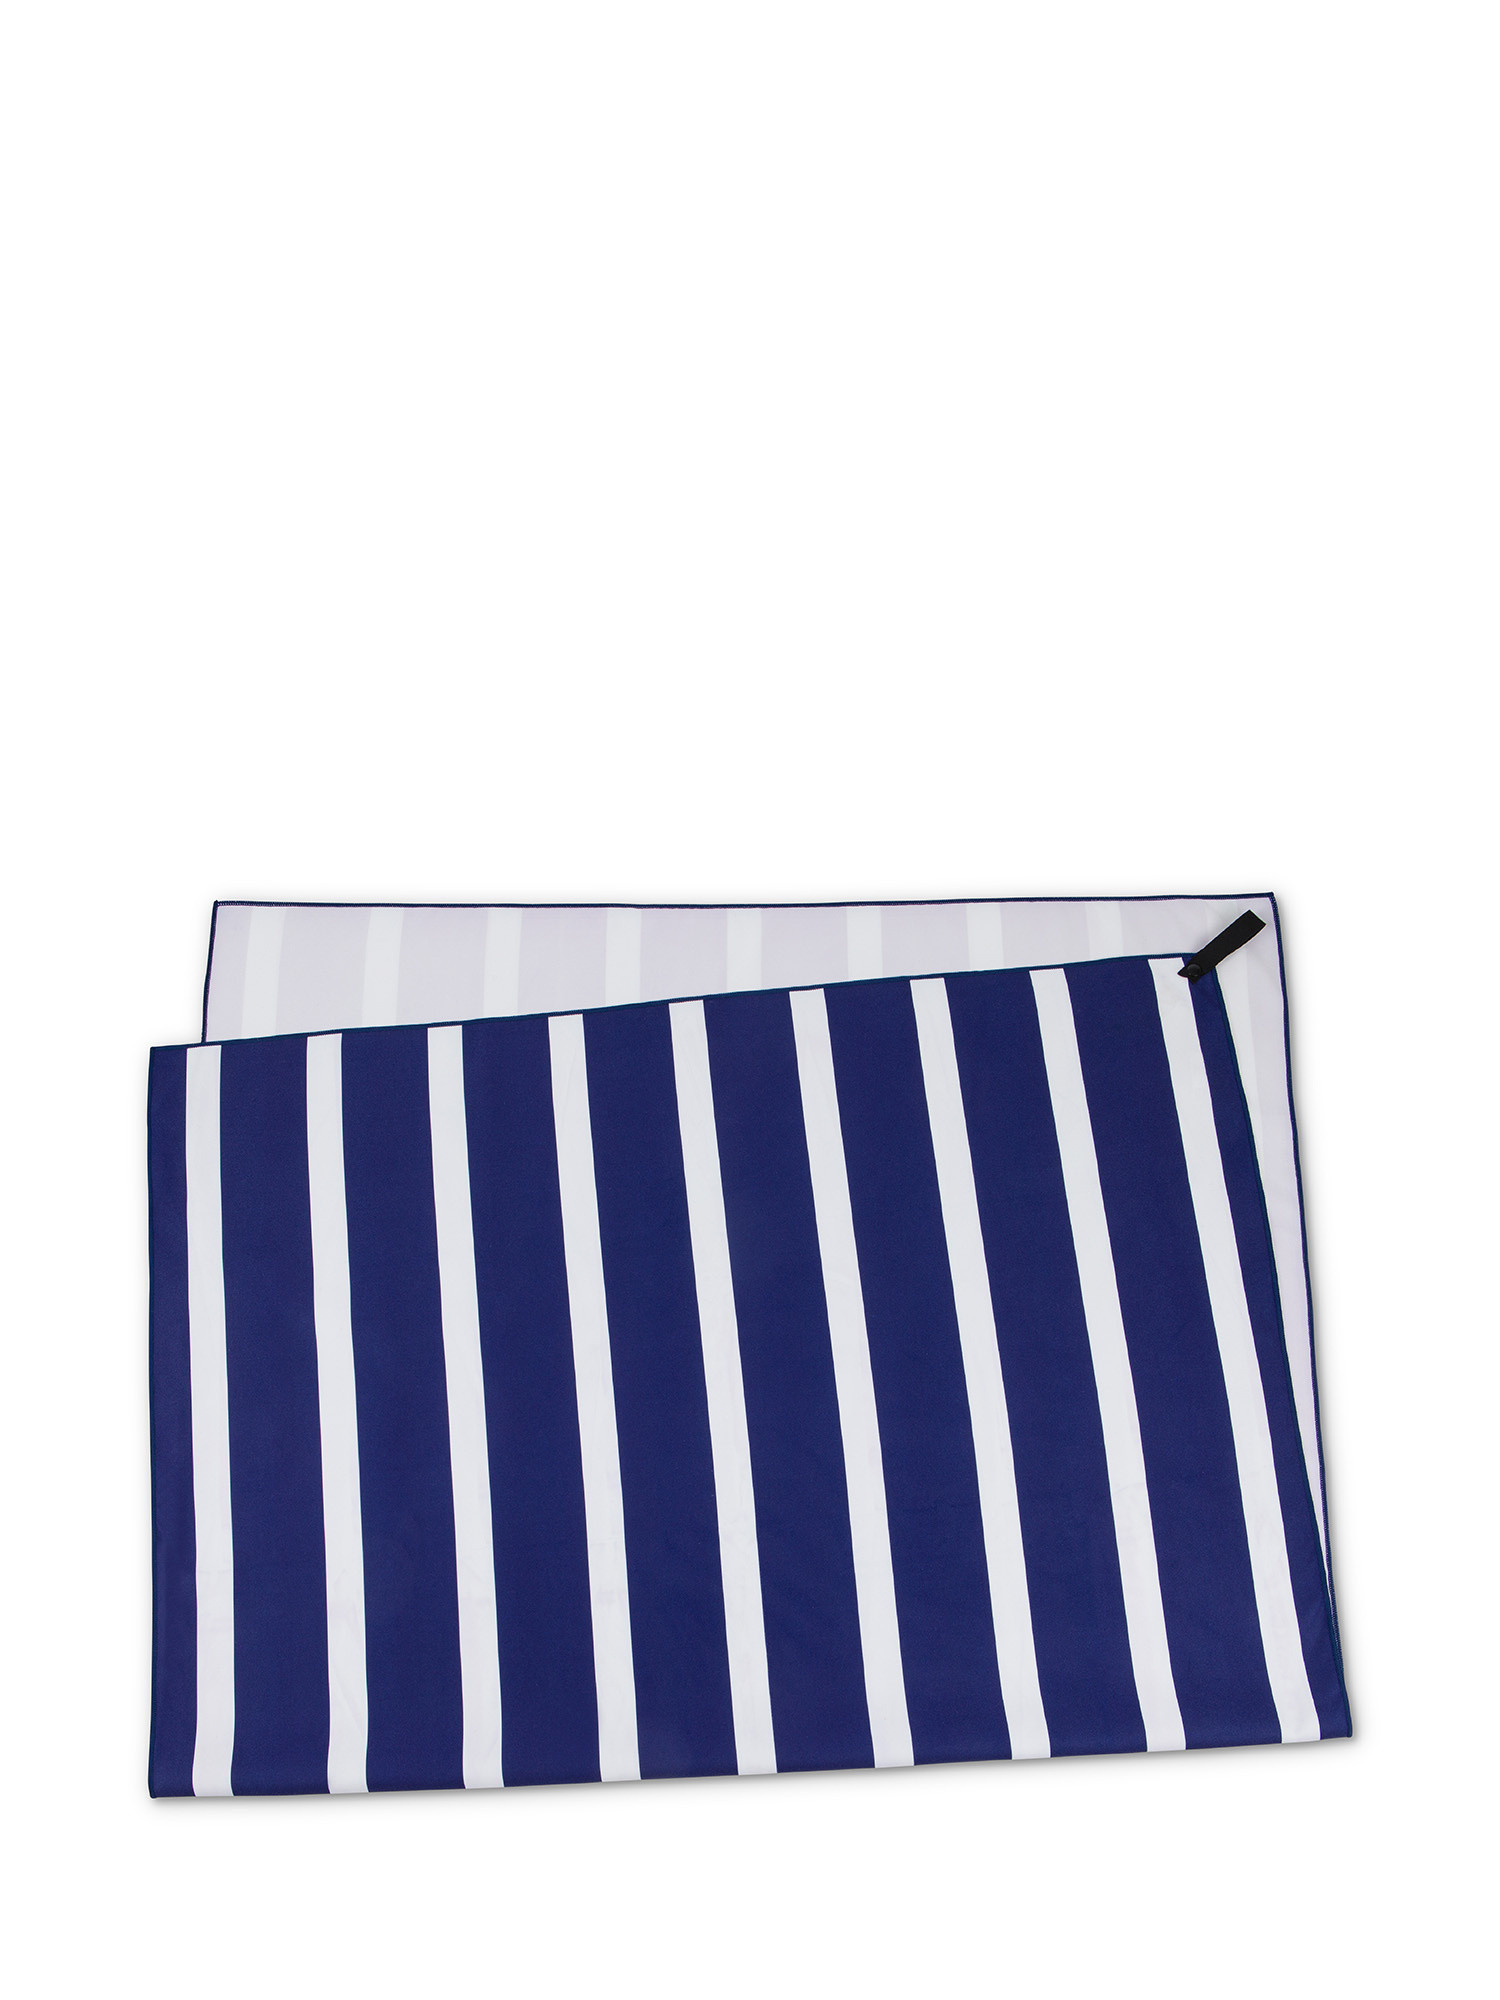 Striped light cotton hammam beach towel, Blue, large image number 1